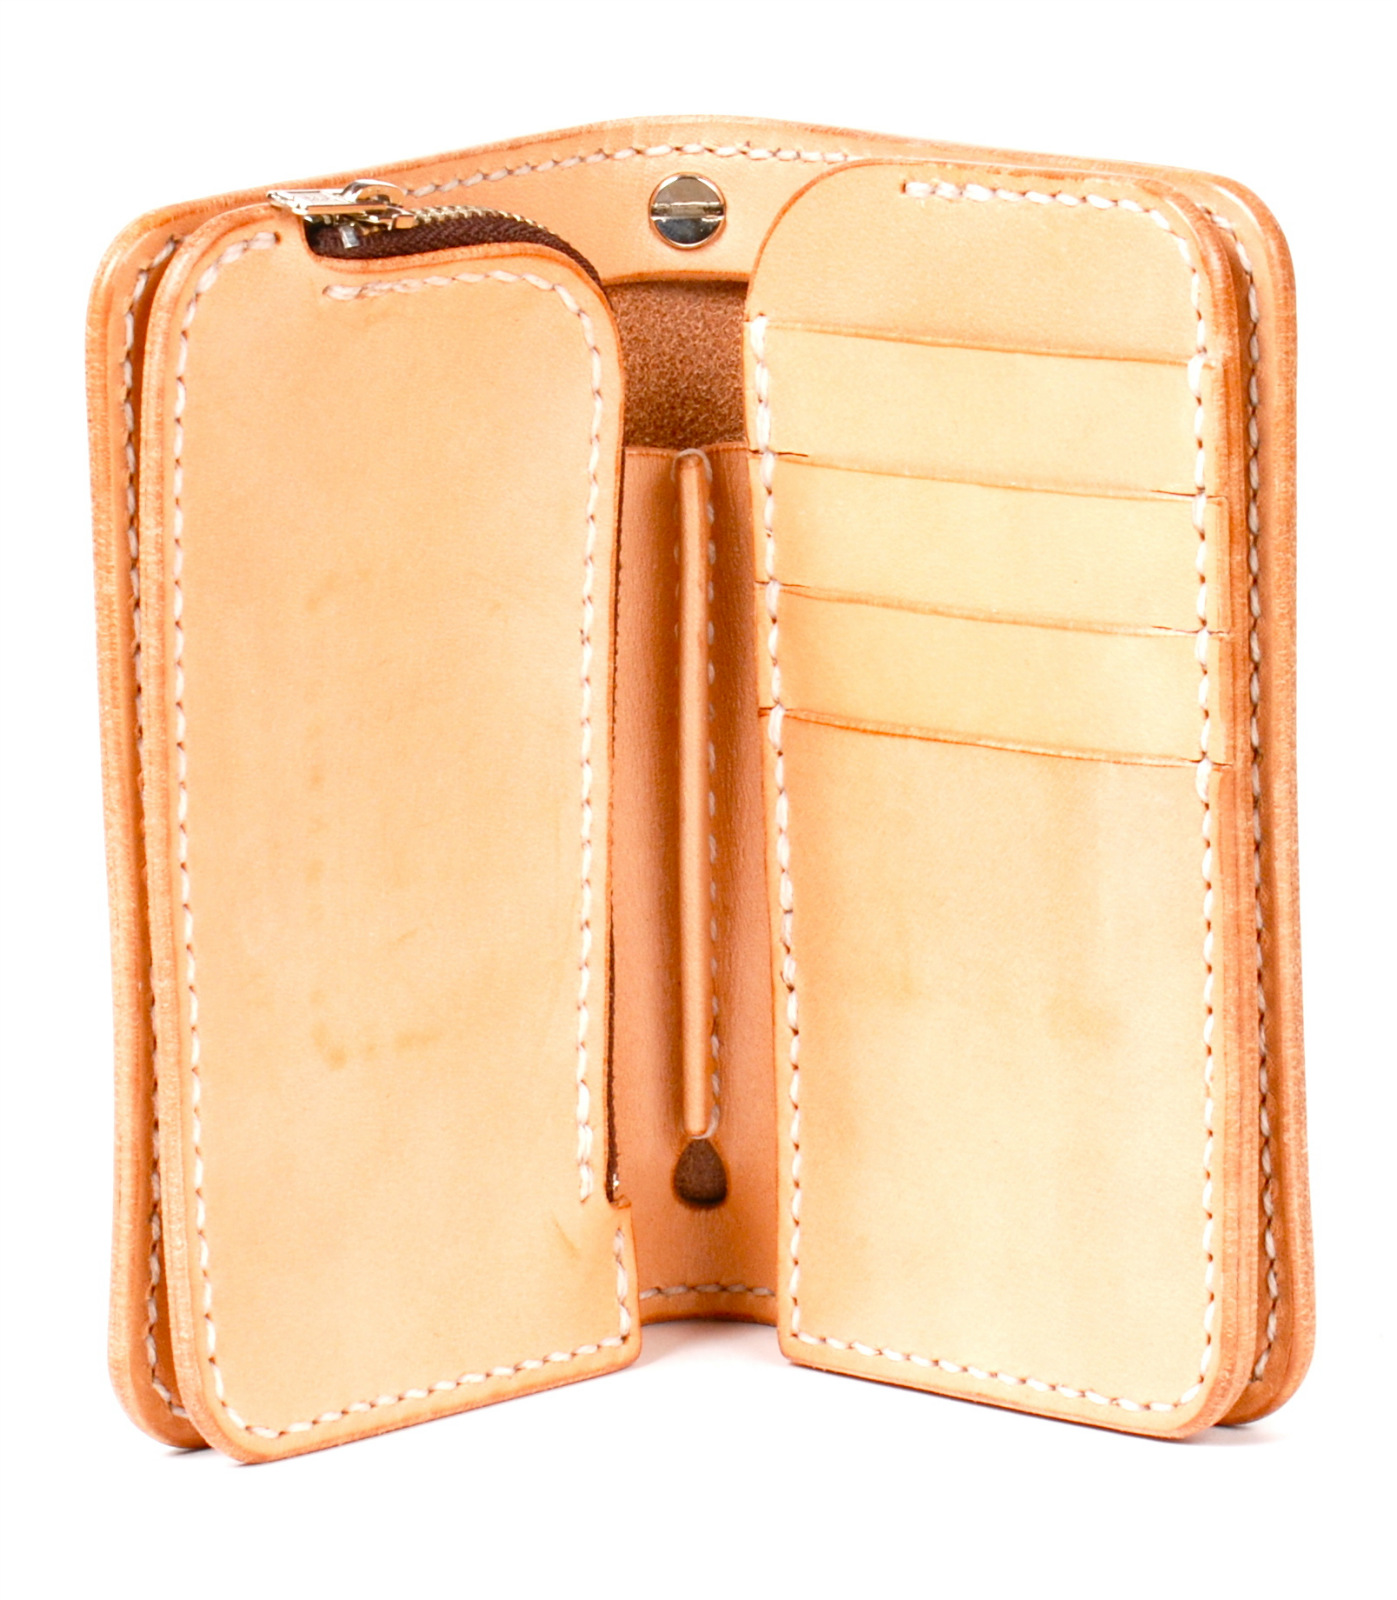 Craft Sha Leathercraft Leather Unisex Wallet Set Bill Fold Coin Case Kit Natural | eBay